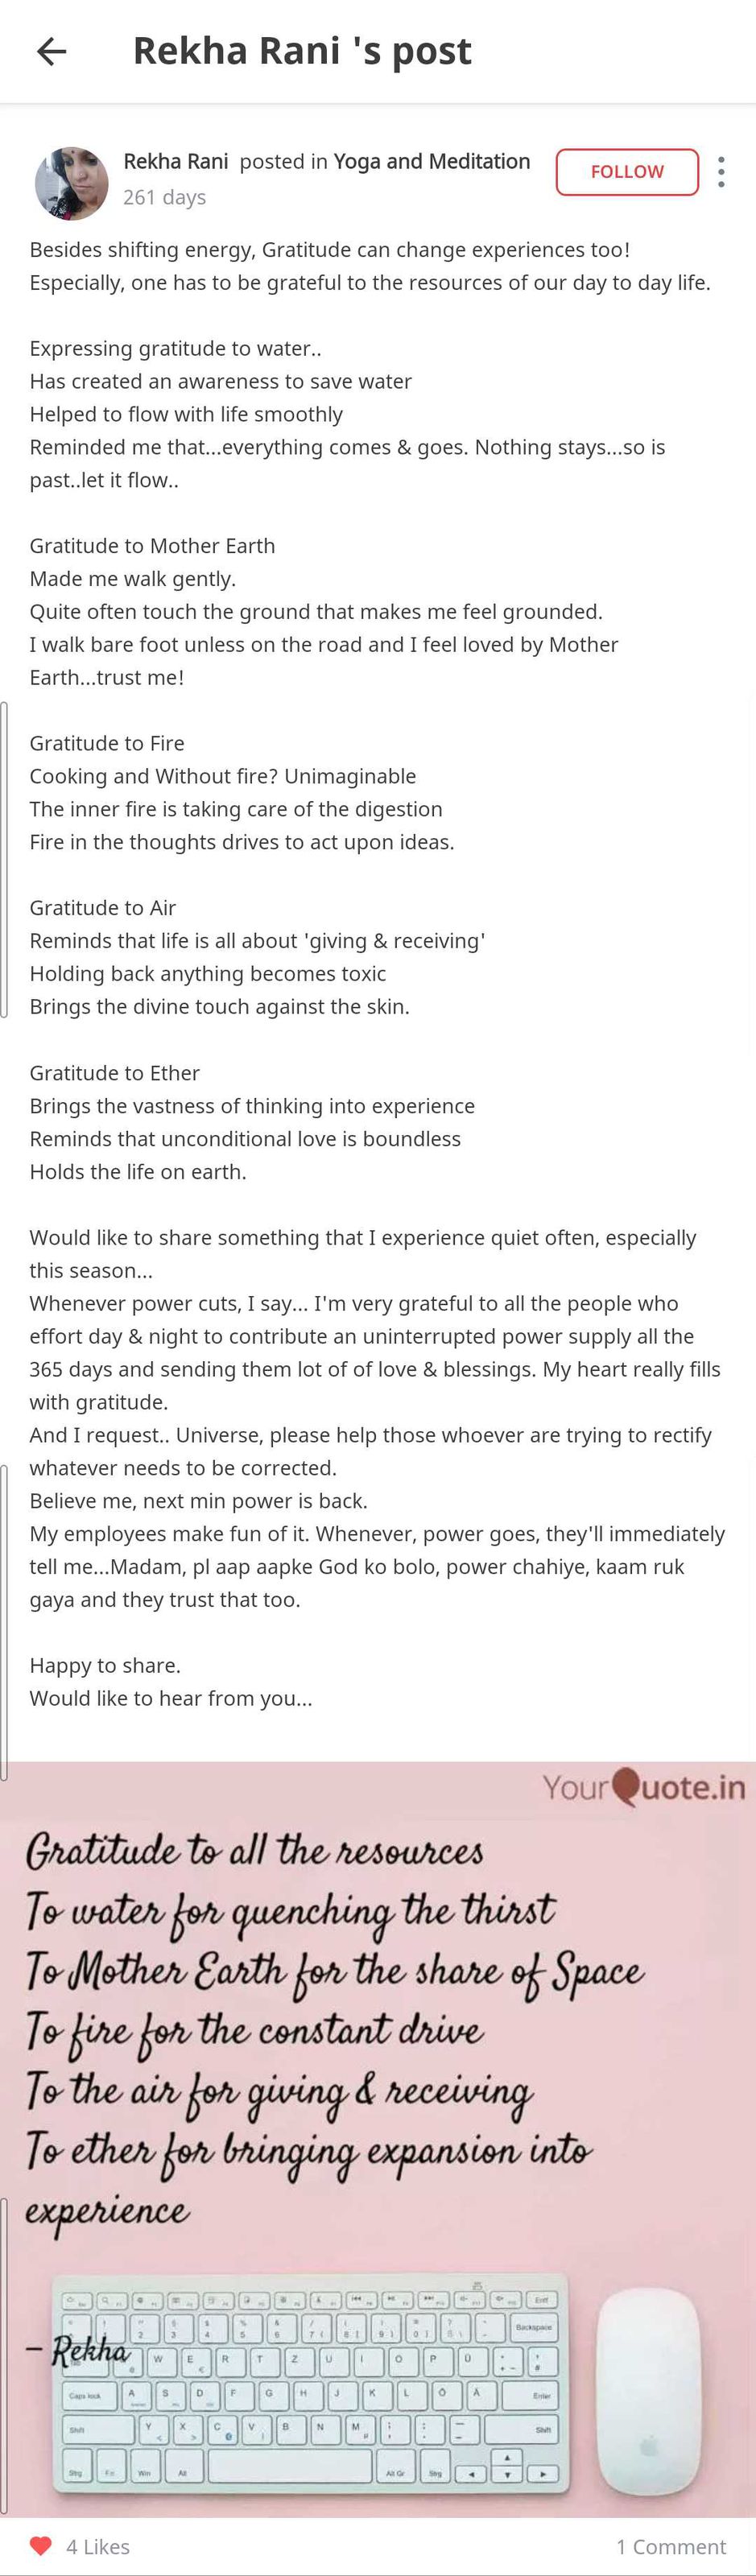 rekha's post on gratitude